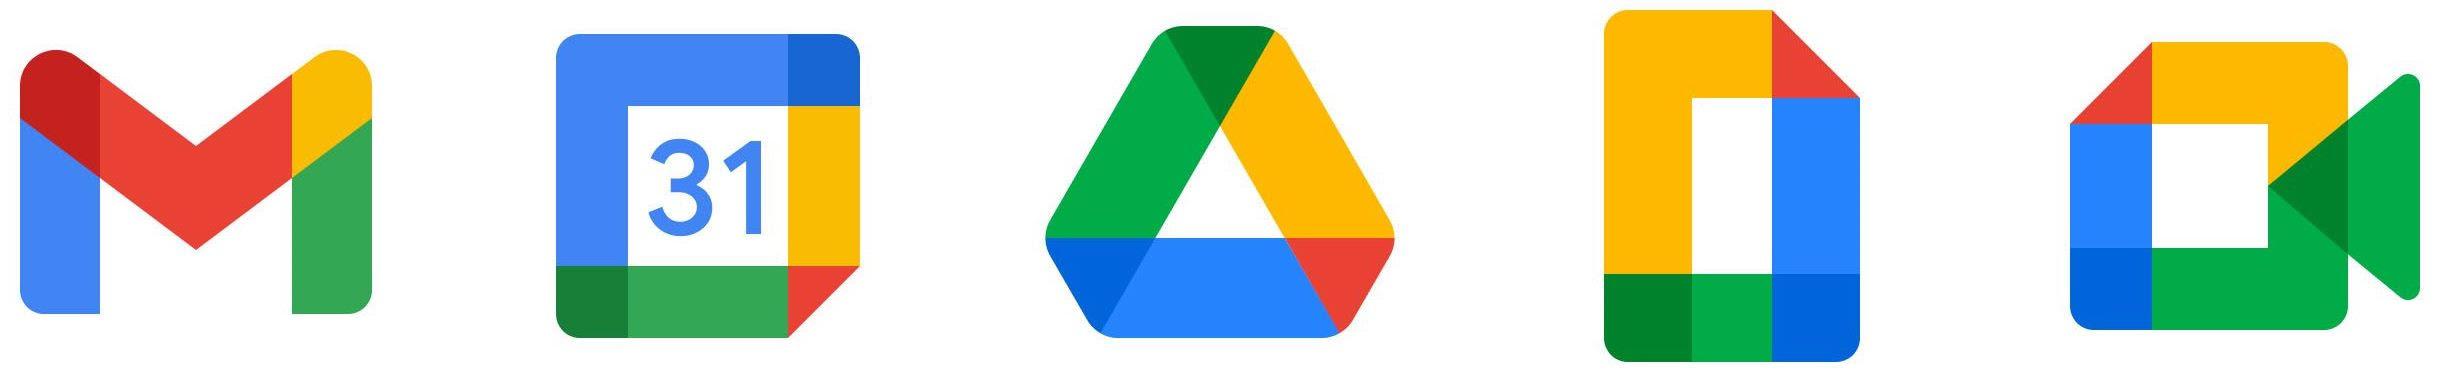 graphic: google suite icons